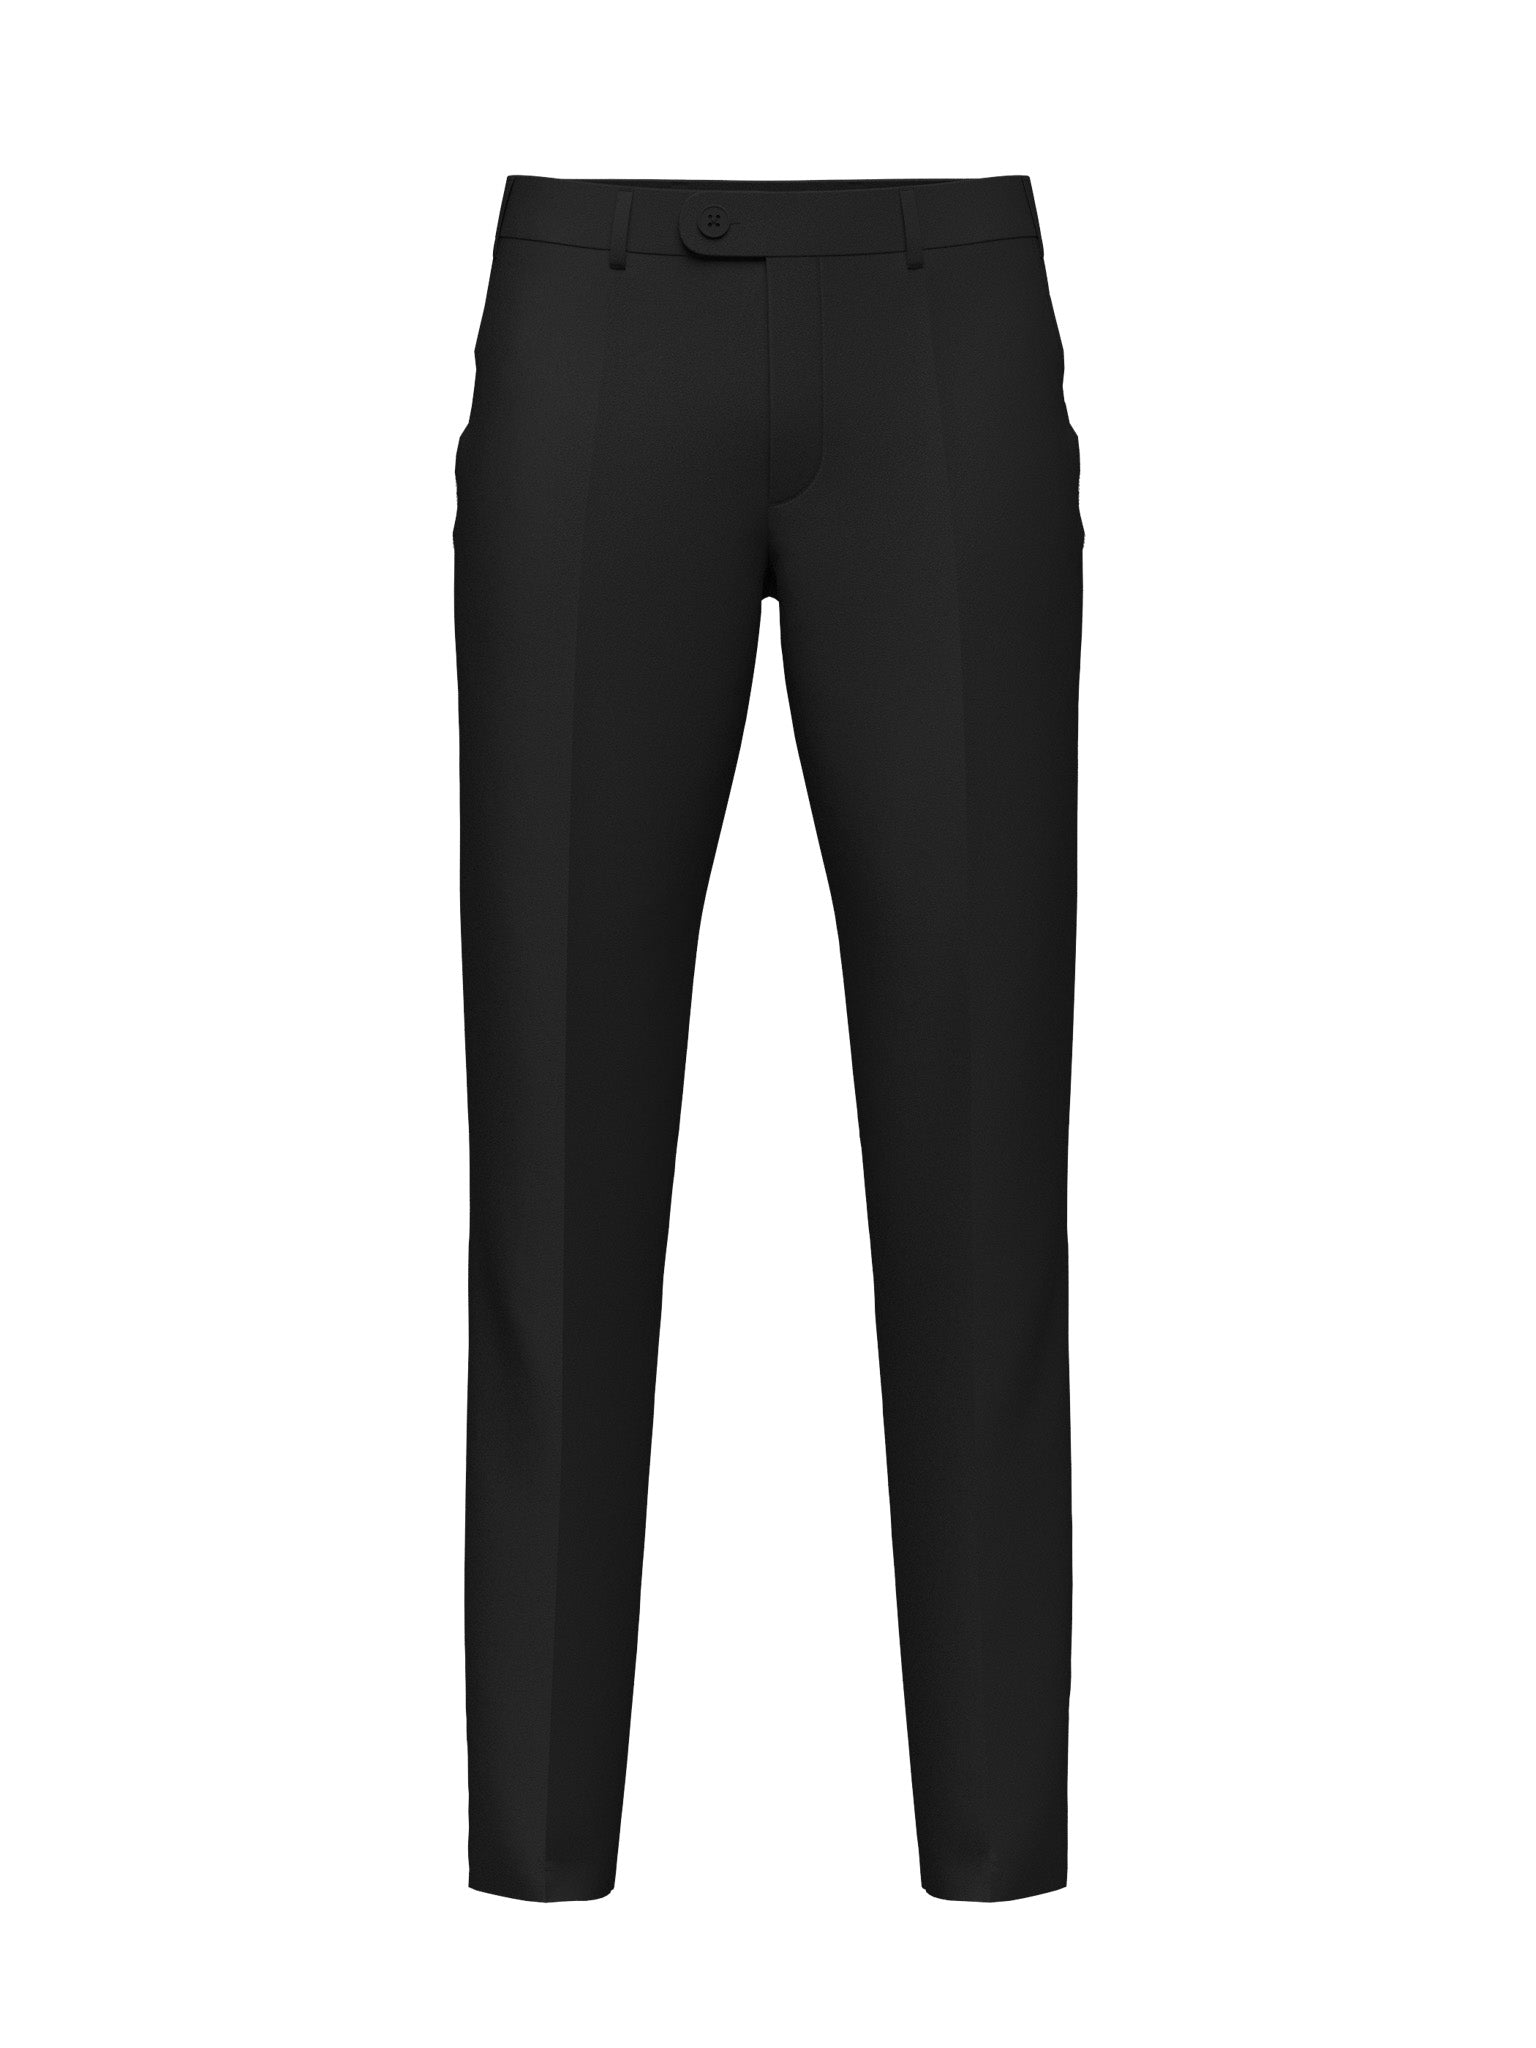 Alpha Black Suit Pants (Made to Measure 3-4 Weeks) – Tenets